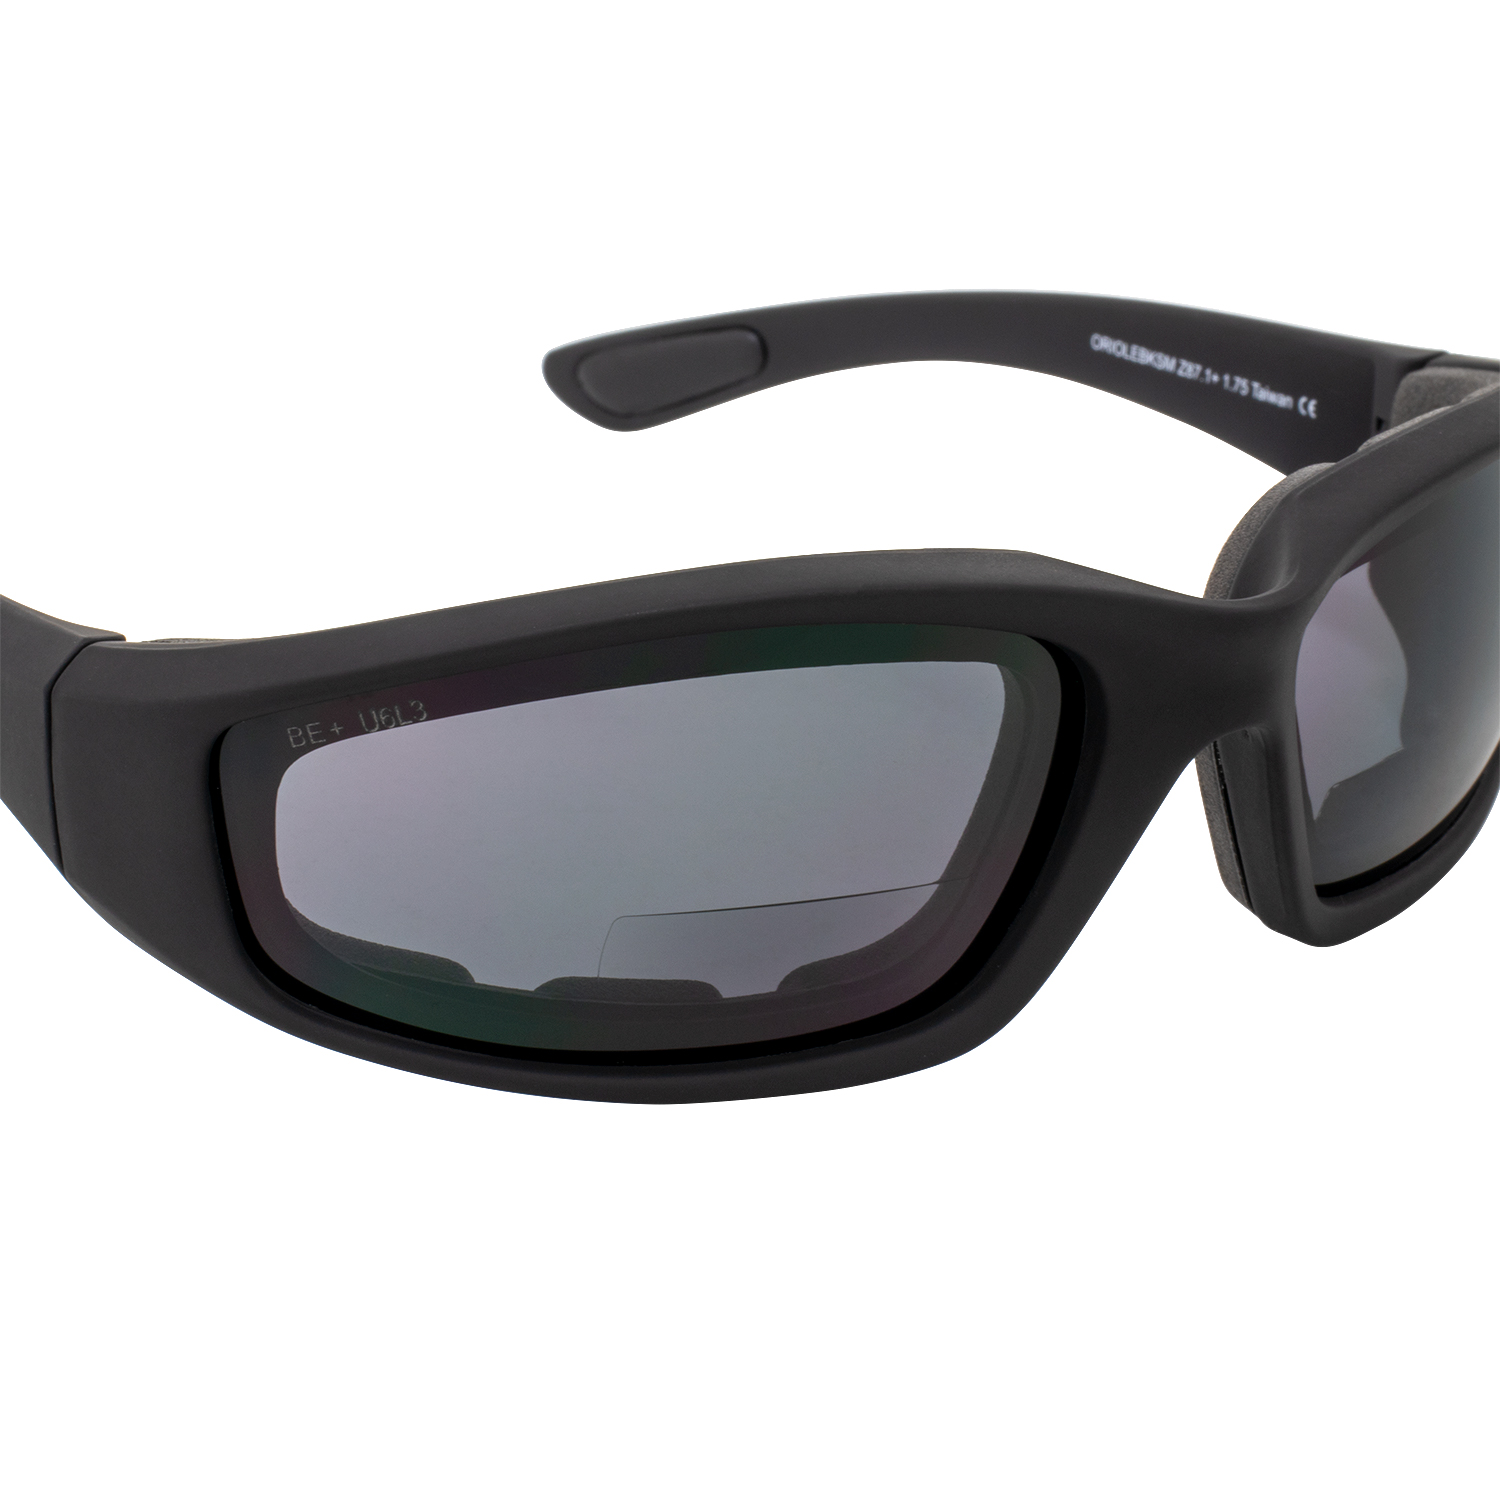 Birdz Eyewear Oriole Padded Safety Bifocal Motorcycle Glasses Black Frame Smoke Lenses 1.75 Magnification Carry Bag